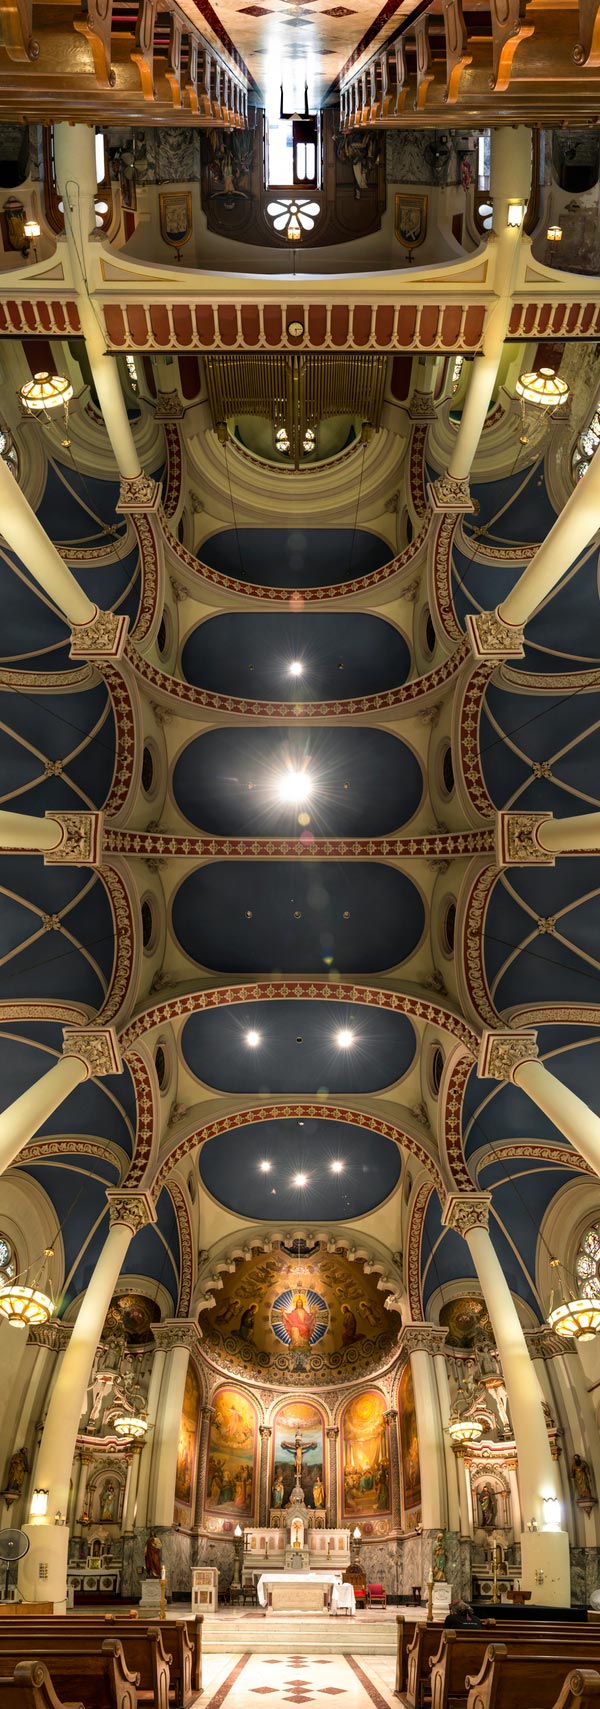 vertical panoramas of church ceilings 5 Amazing Vertical Panoramas of Church Ceilings